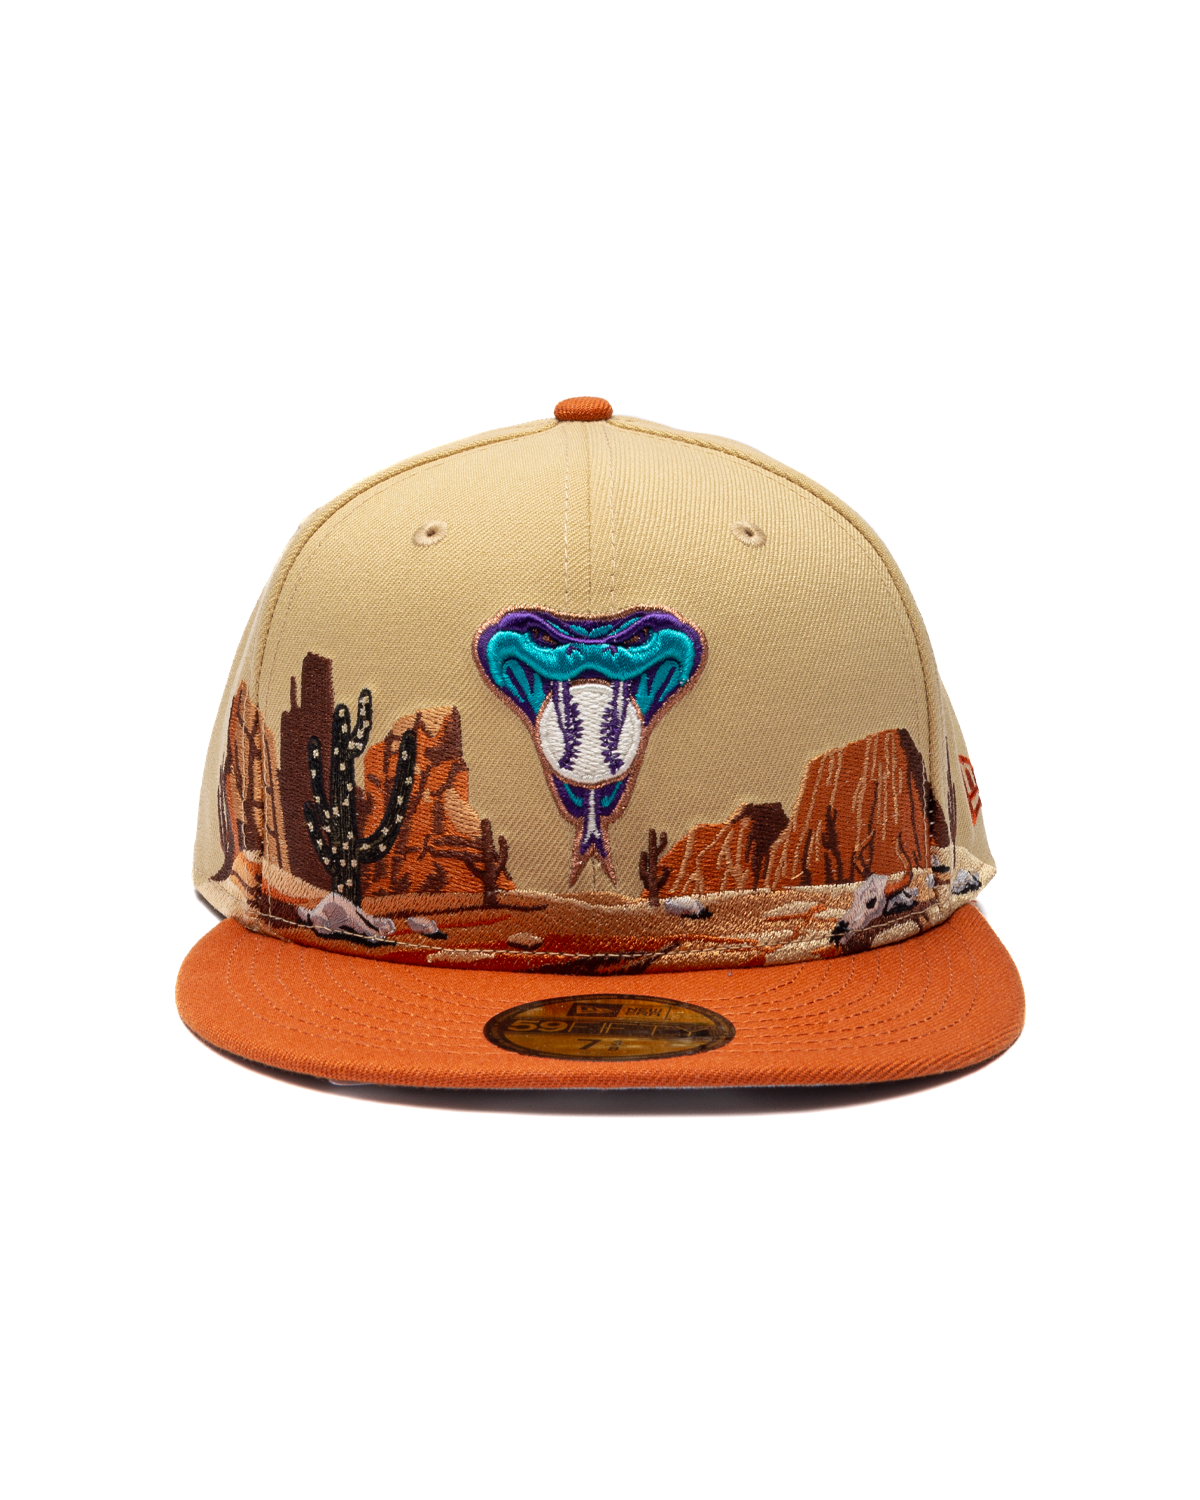 Arizona Diamondbacks Cooperstown Team Landscape Fitted Hat